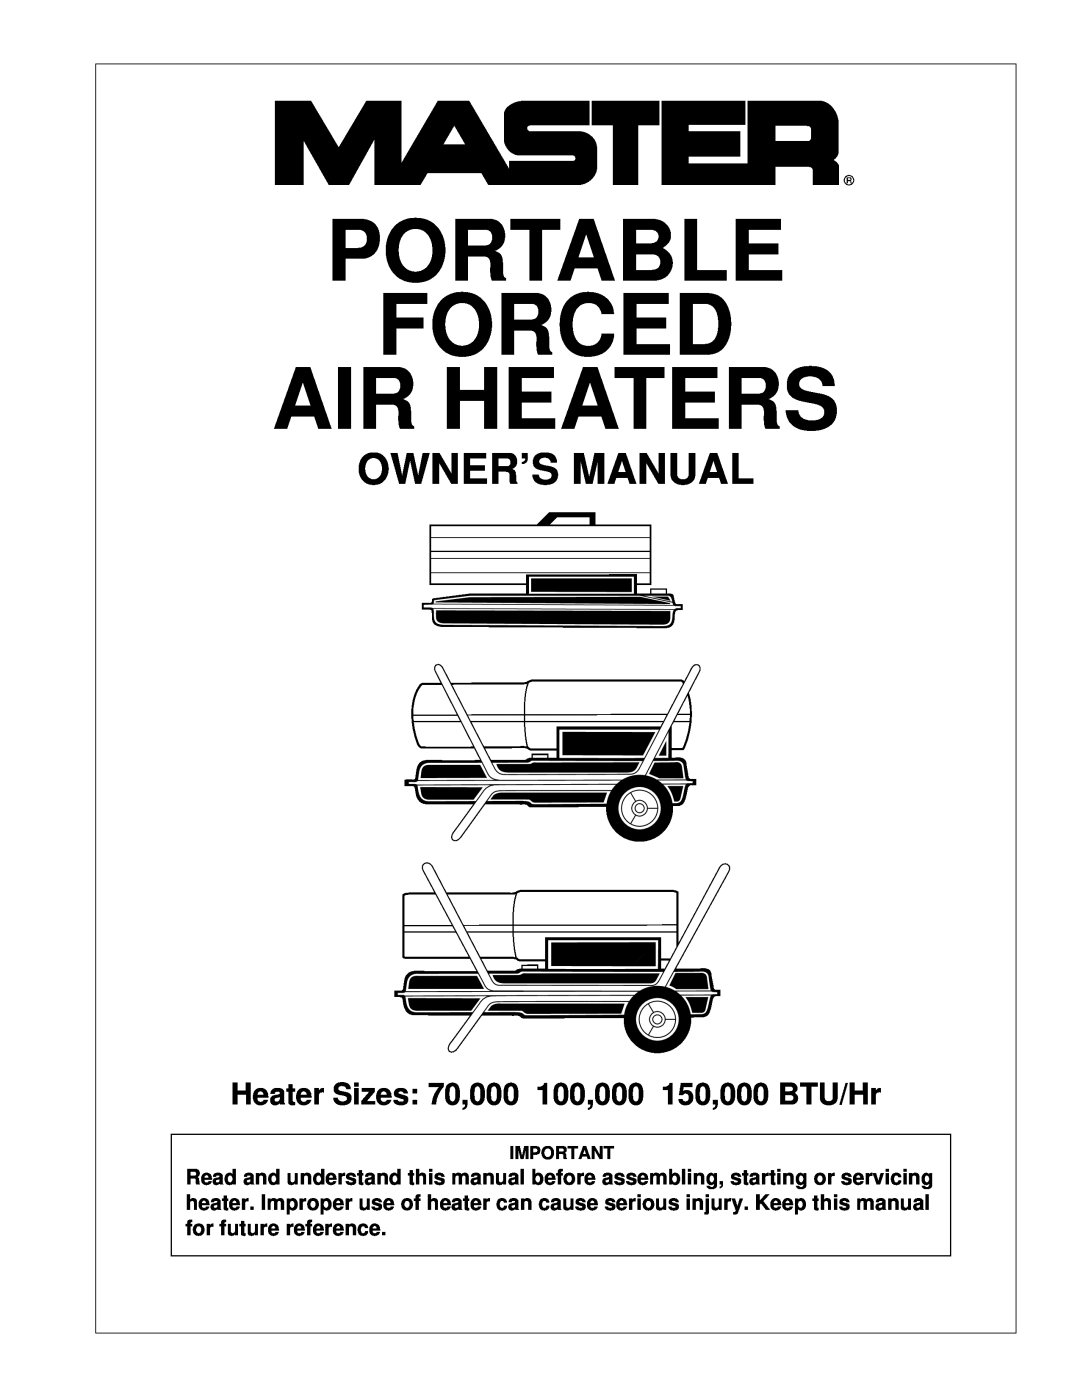 Master Lock 70000 BTU/Hr owner manual Heater Sizes 70,000 100,000 150,000 BTU/Hr, Portable Forced Air Heaters, Side 